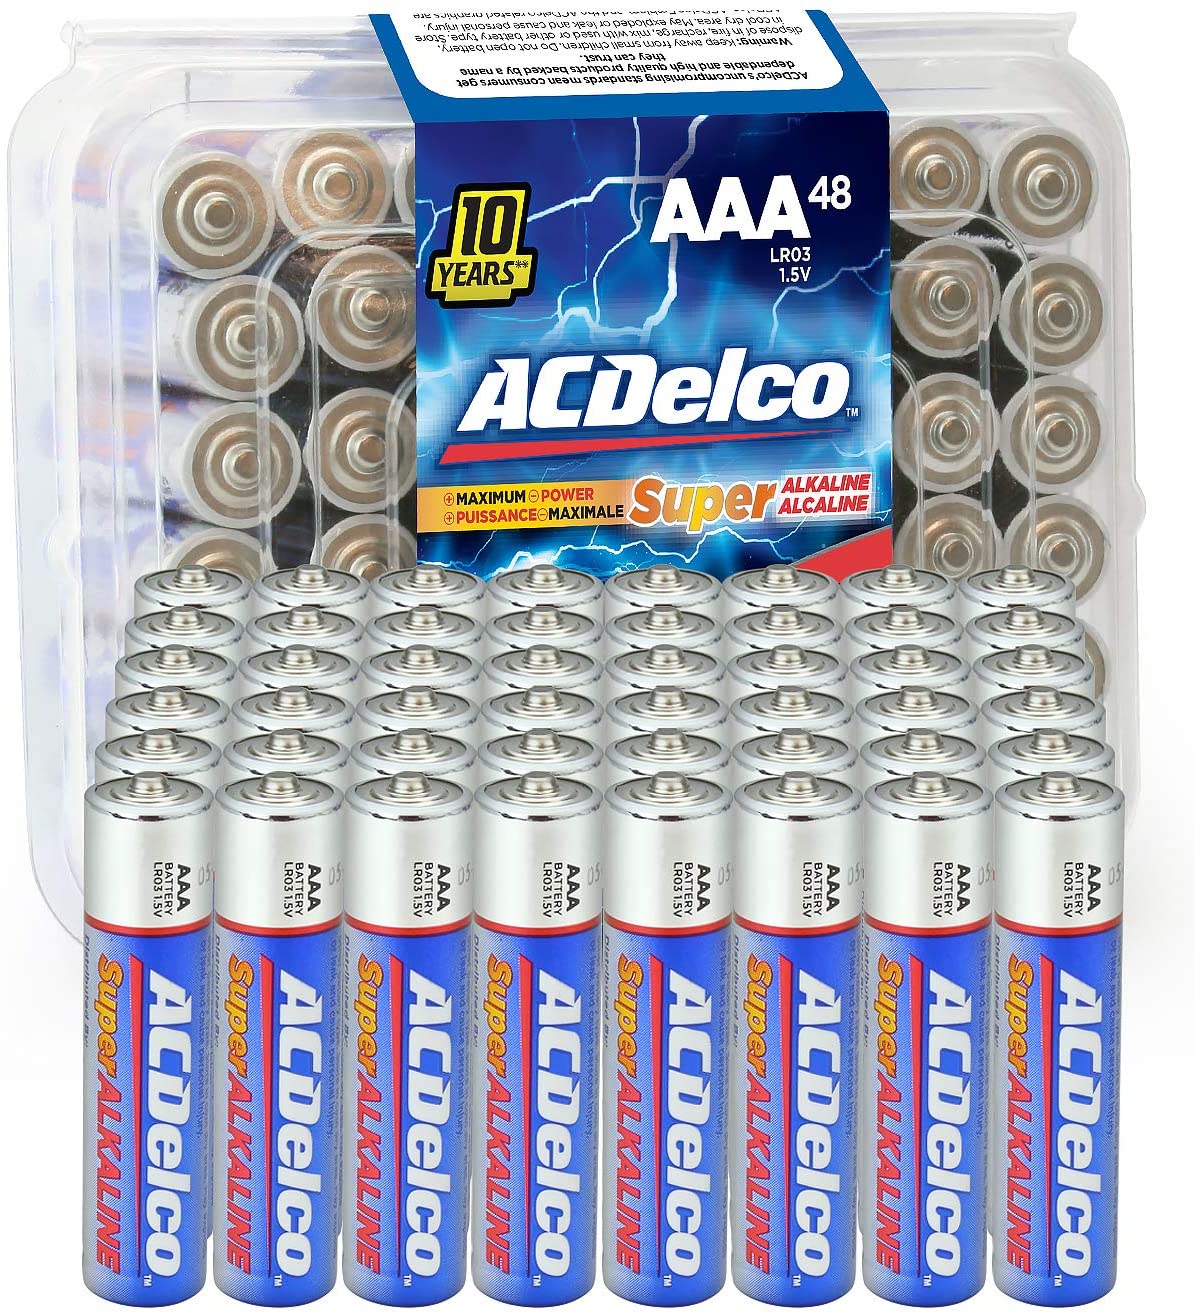 10-Year Shelf Life Maximum Power Super Alkaline Battery ACDelco 20-Count AA Batteries 20 Count Maximum Power Super Alkaline Battery 10-Year Shelf Life & ACDelco AAA Batteries 